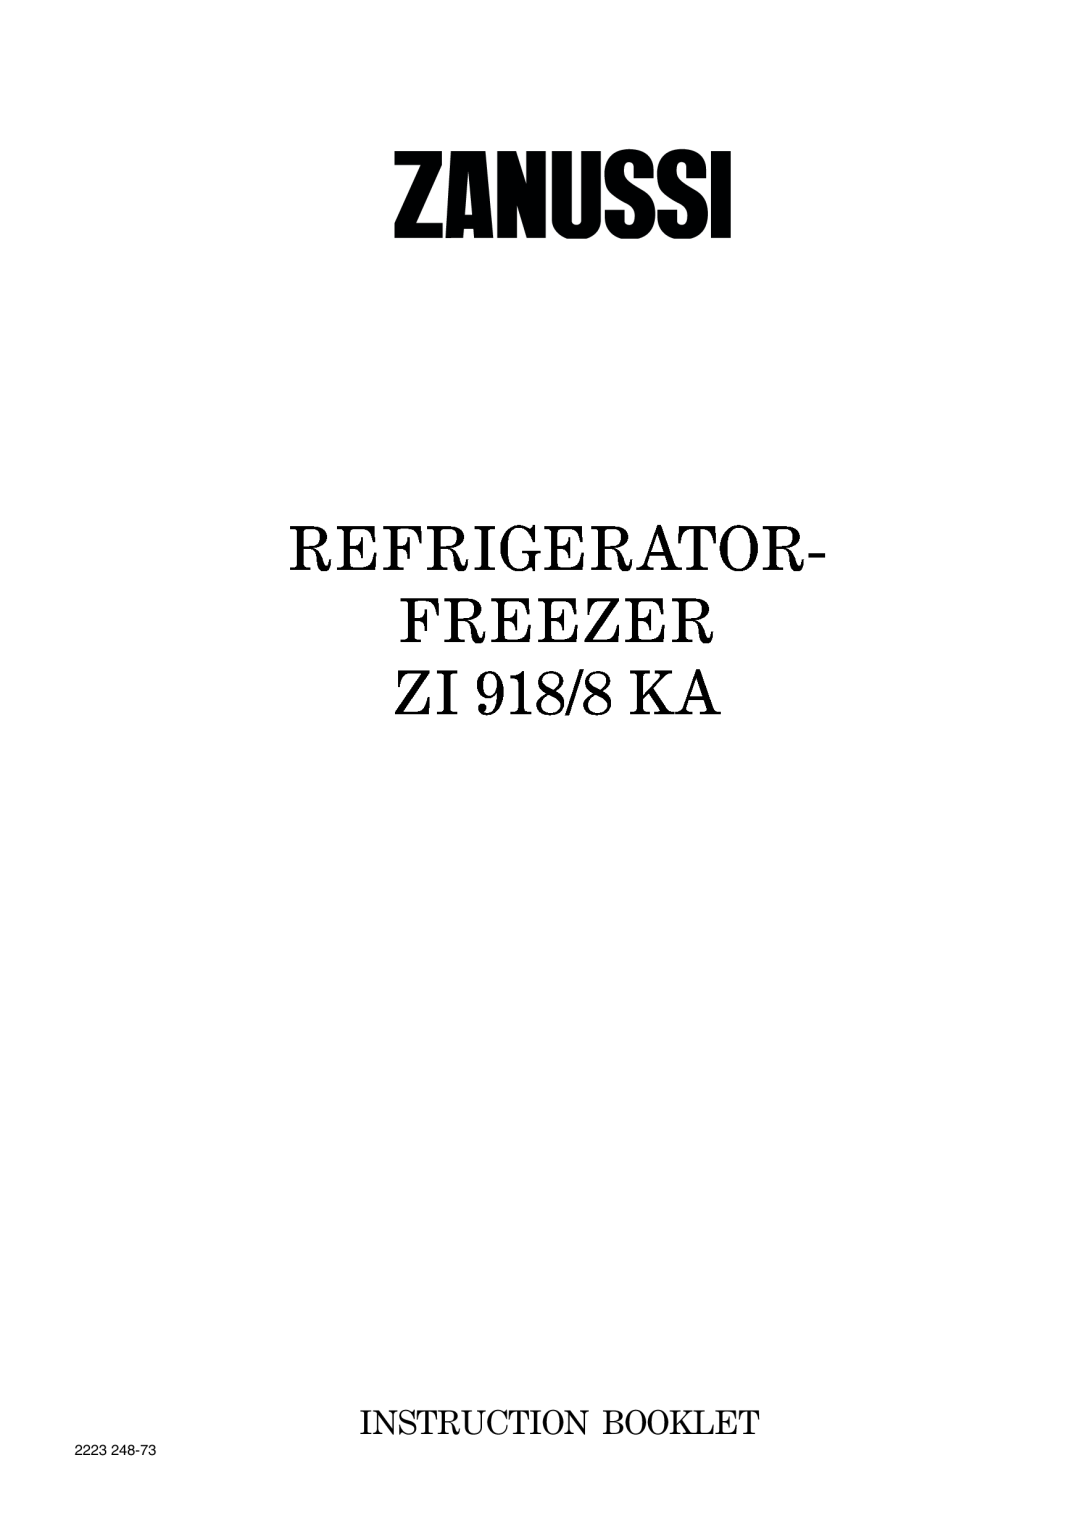 Zanussi manual REFRIGERATOR FREEZER ZI 918/8 KA, Instruction Booklet, 2223 